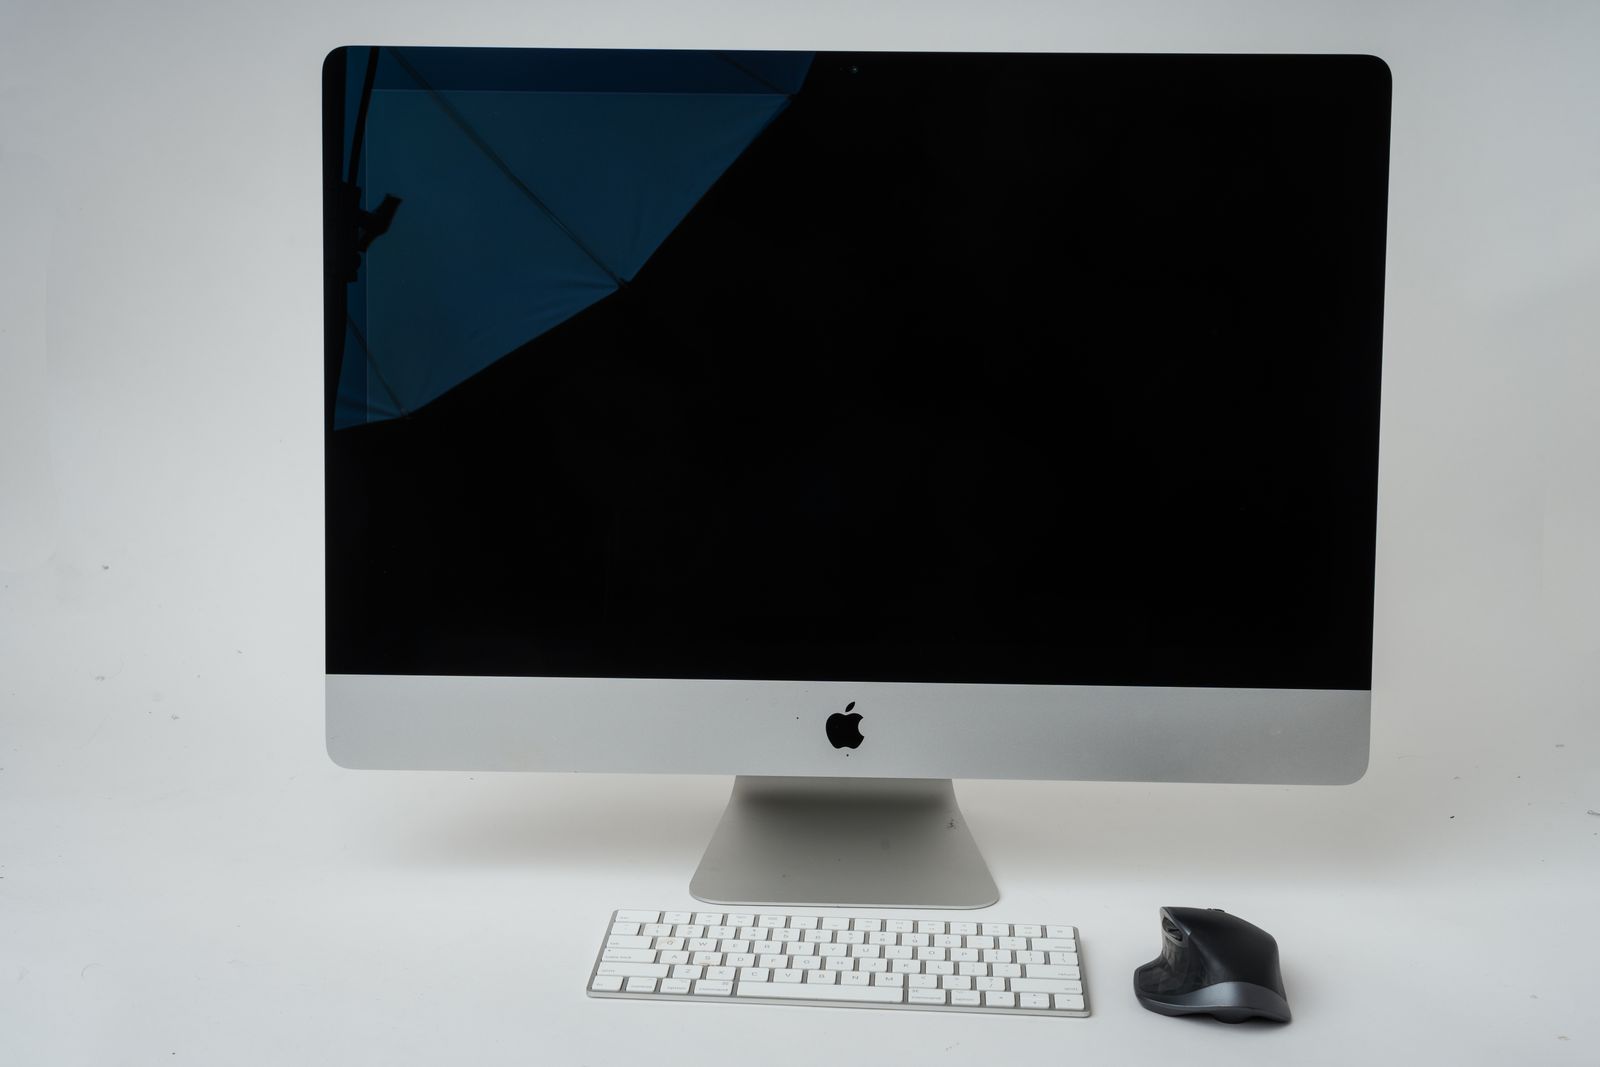 iMac (Retina 5K, 27-inch, late 2019) TOP SPEC